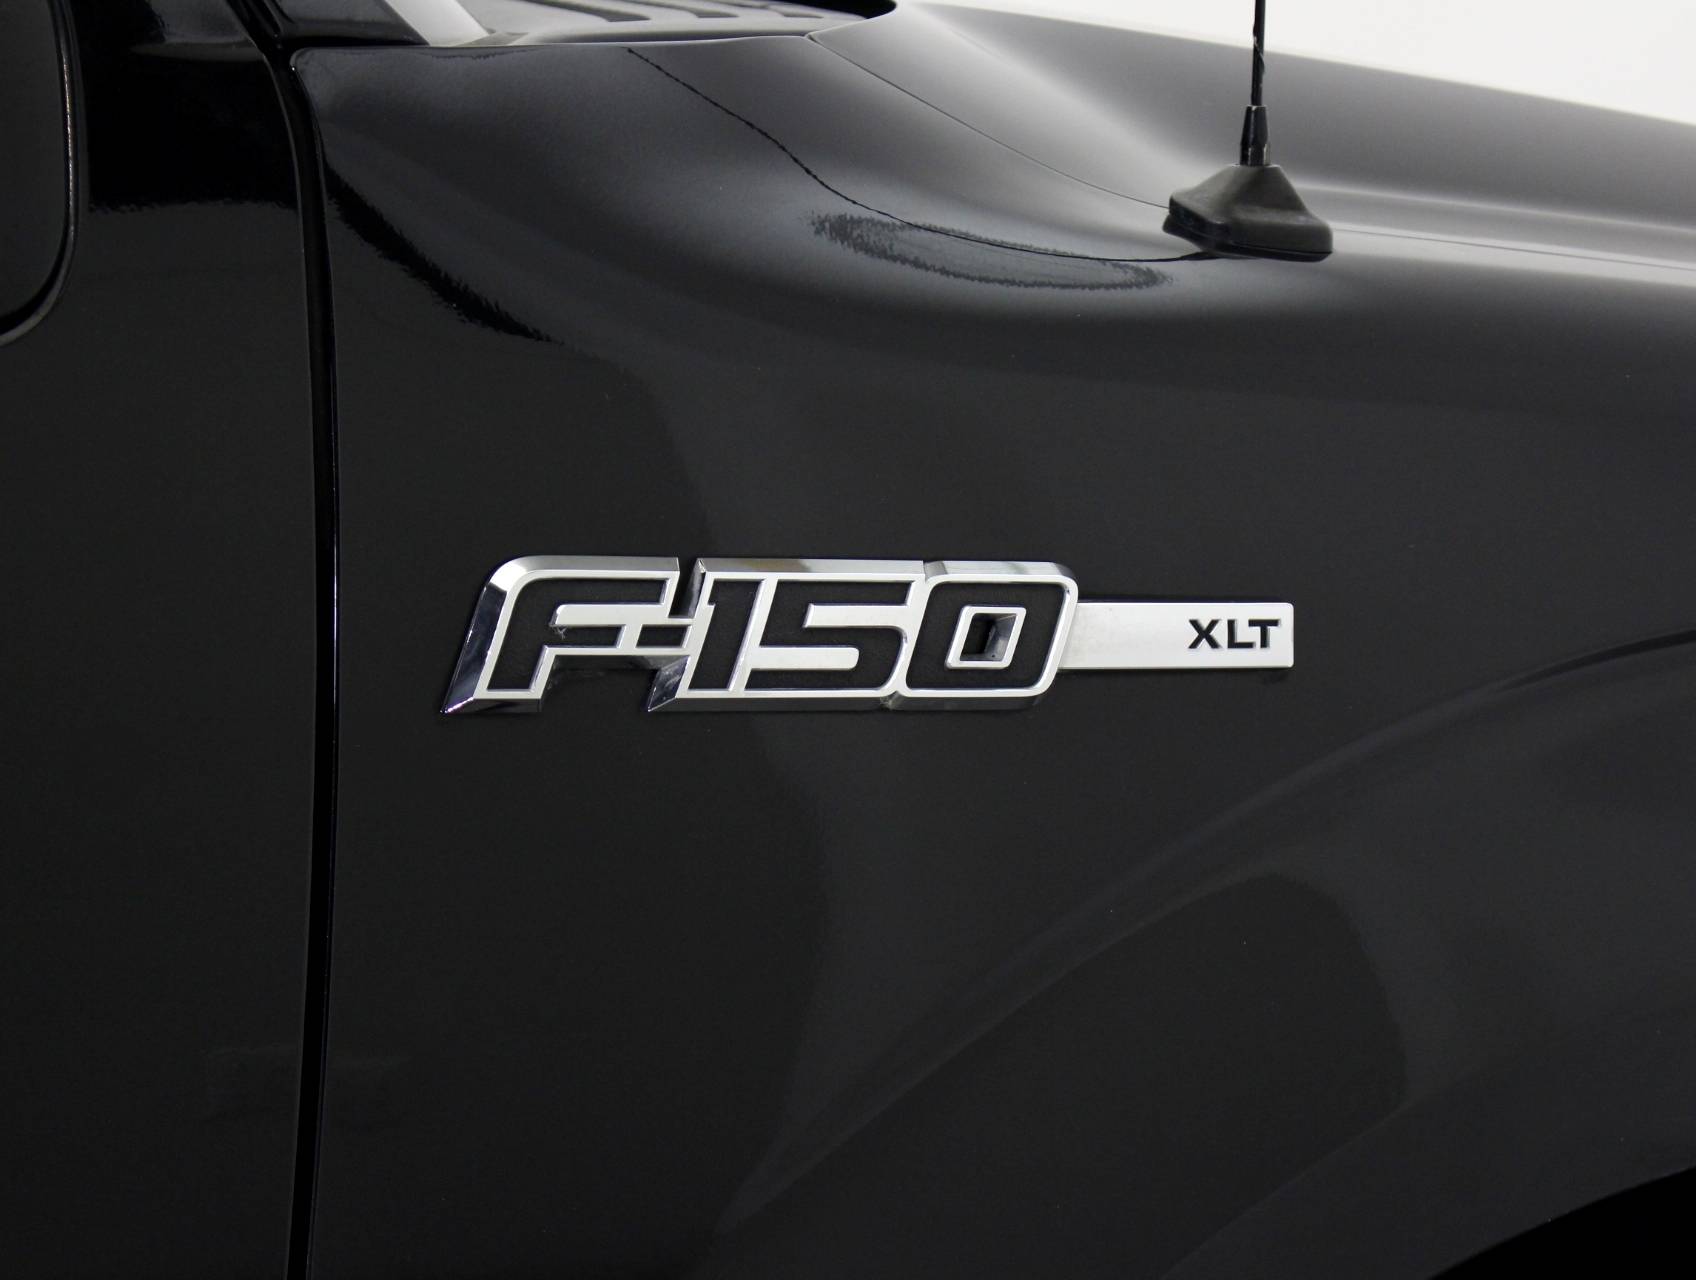 Florida Fine Cars - Used FORD F 150 2014 HOLLYWOOD Xlt